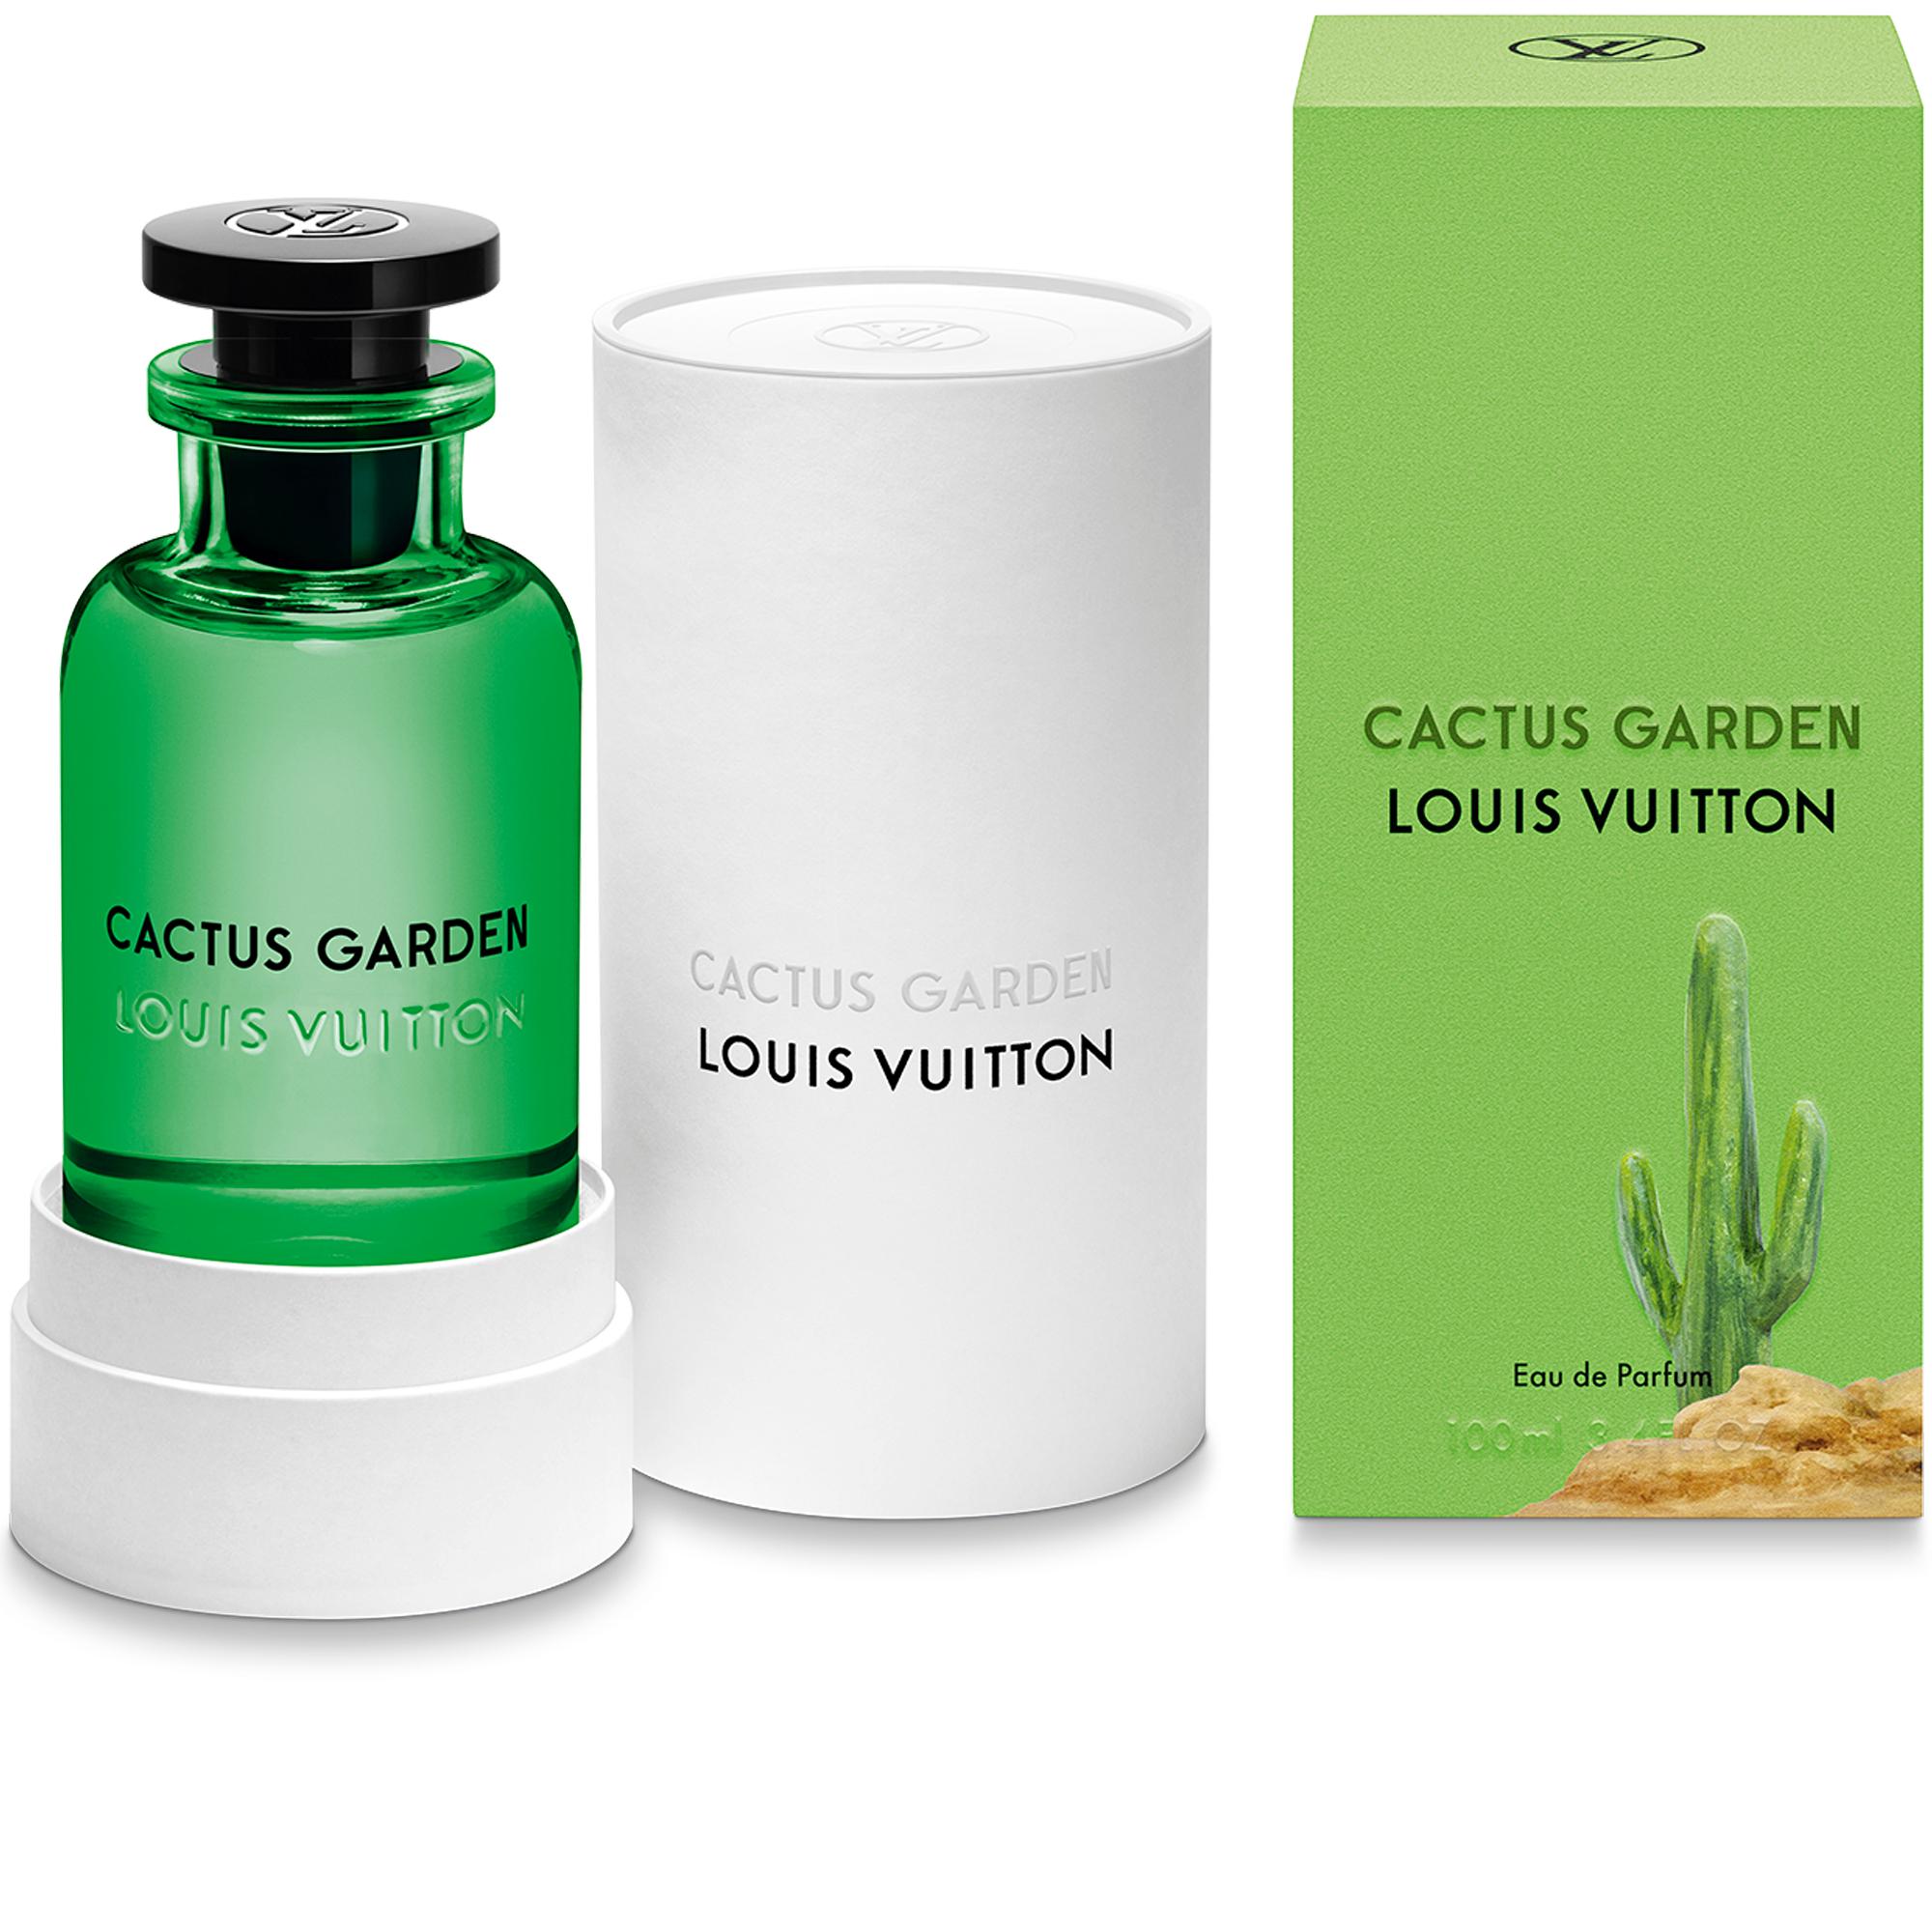 Louis Vuitton Cactus Garden www.waldenwongart.com - Nước hoa cao cấp, chính hãng giá tốt, mẫu mới